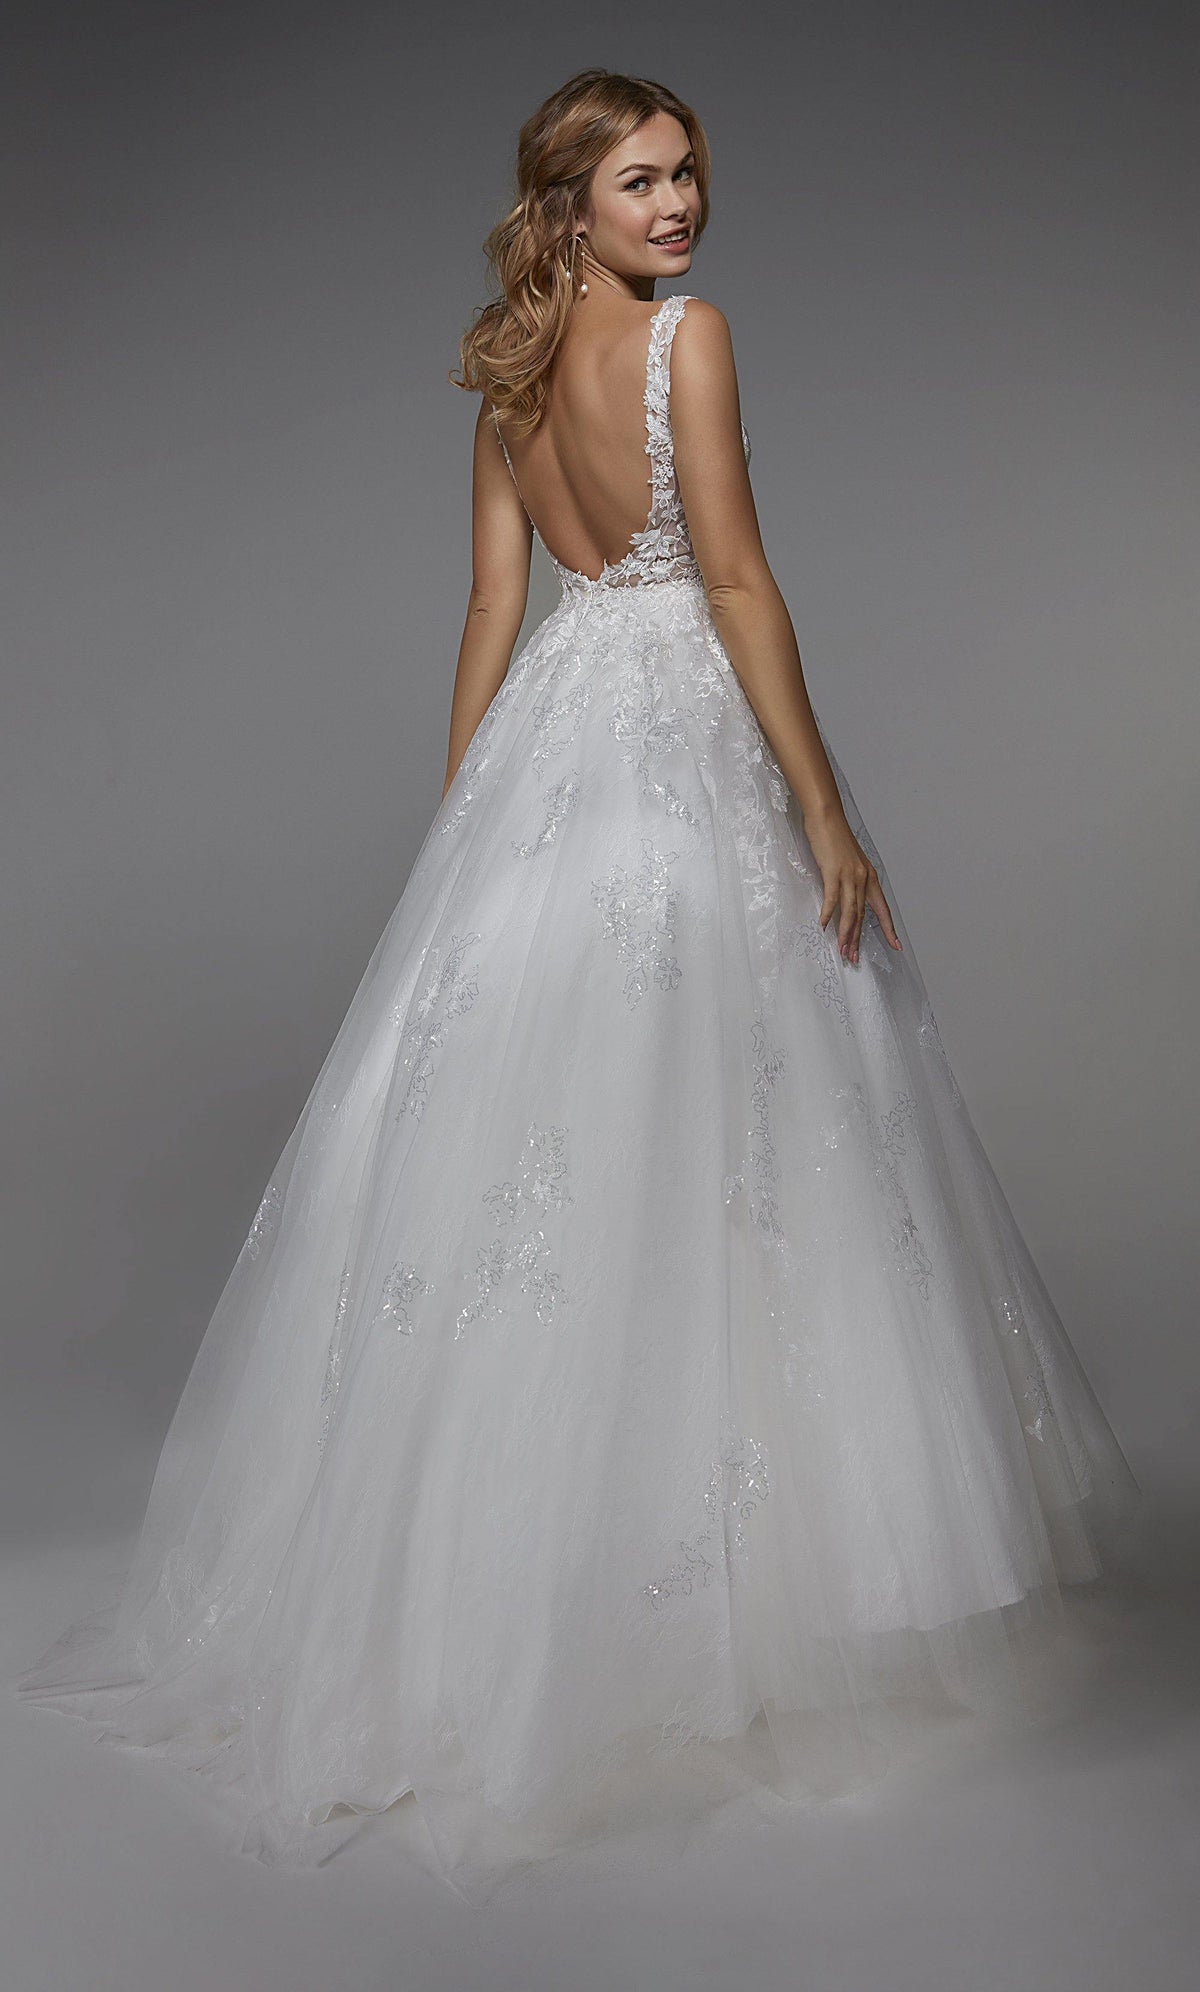 Formal Dress: 7039. Long Wedding Dress, Plunging Neckline, Ball Gown Alyce Paris